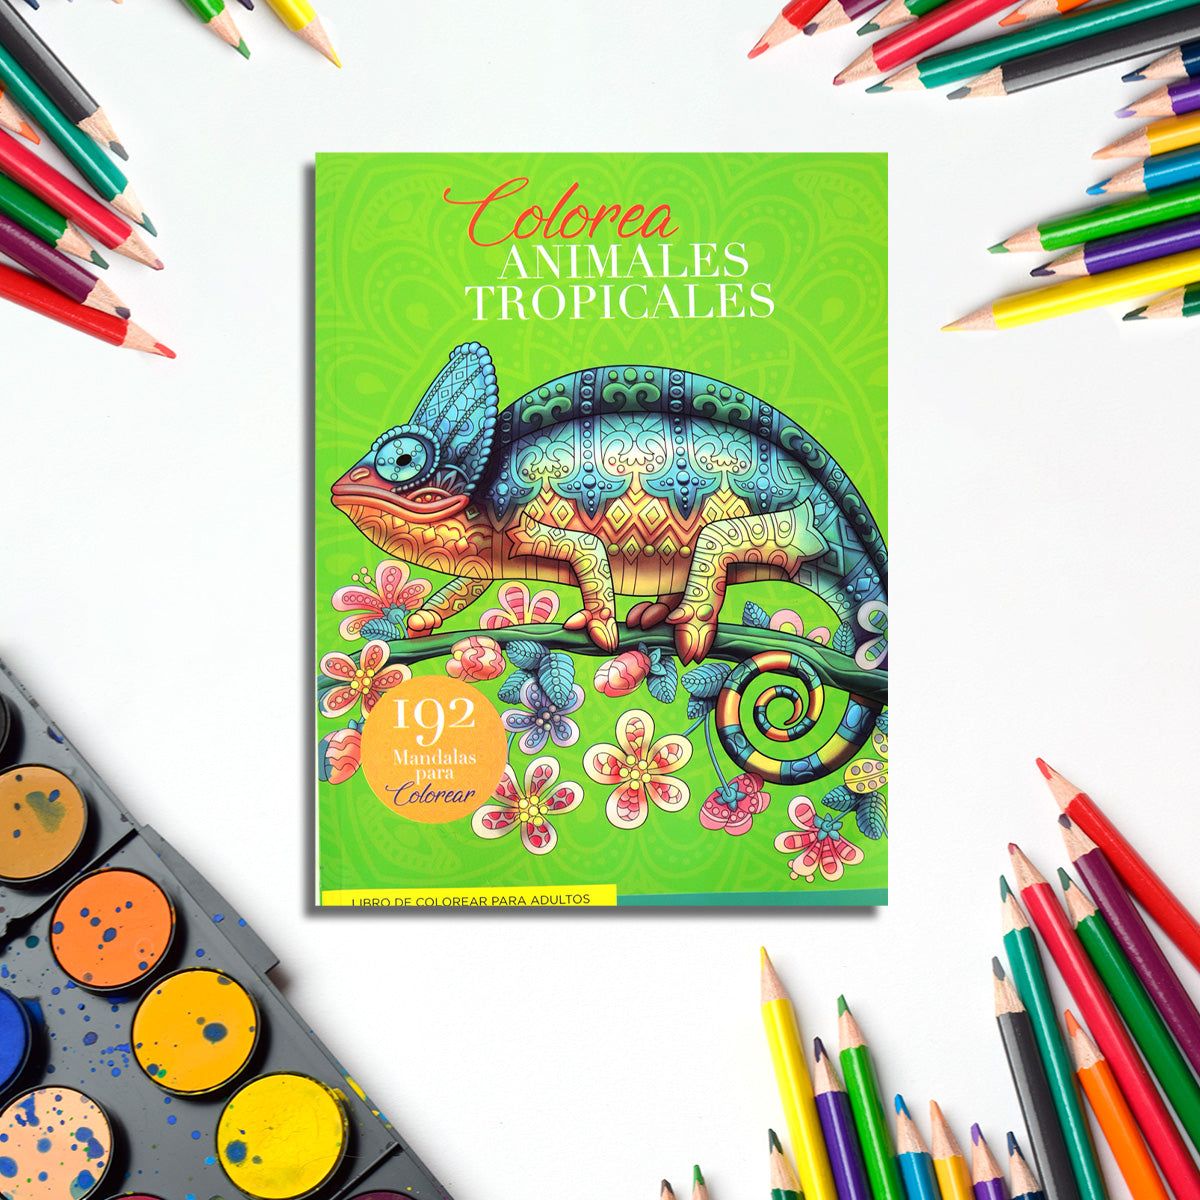 Infantil - Combo especial libros para pintar y dibujar